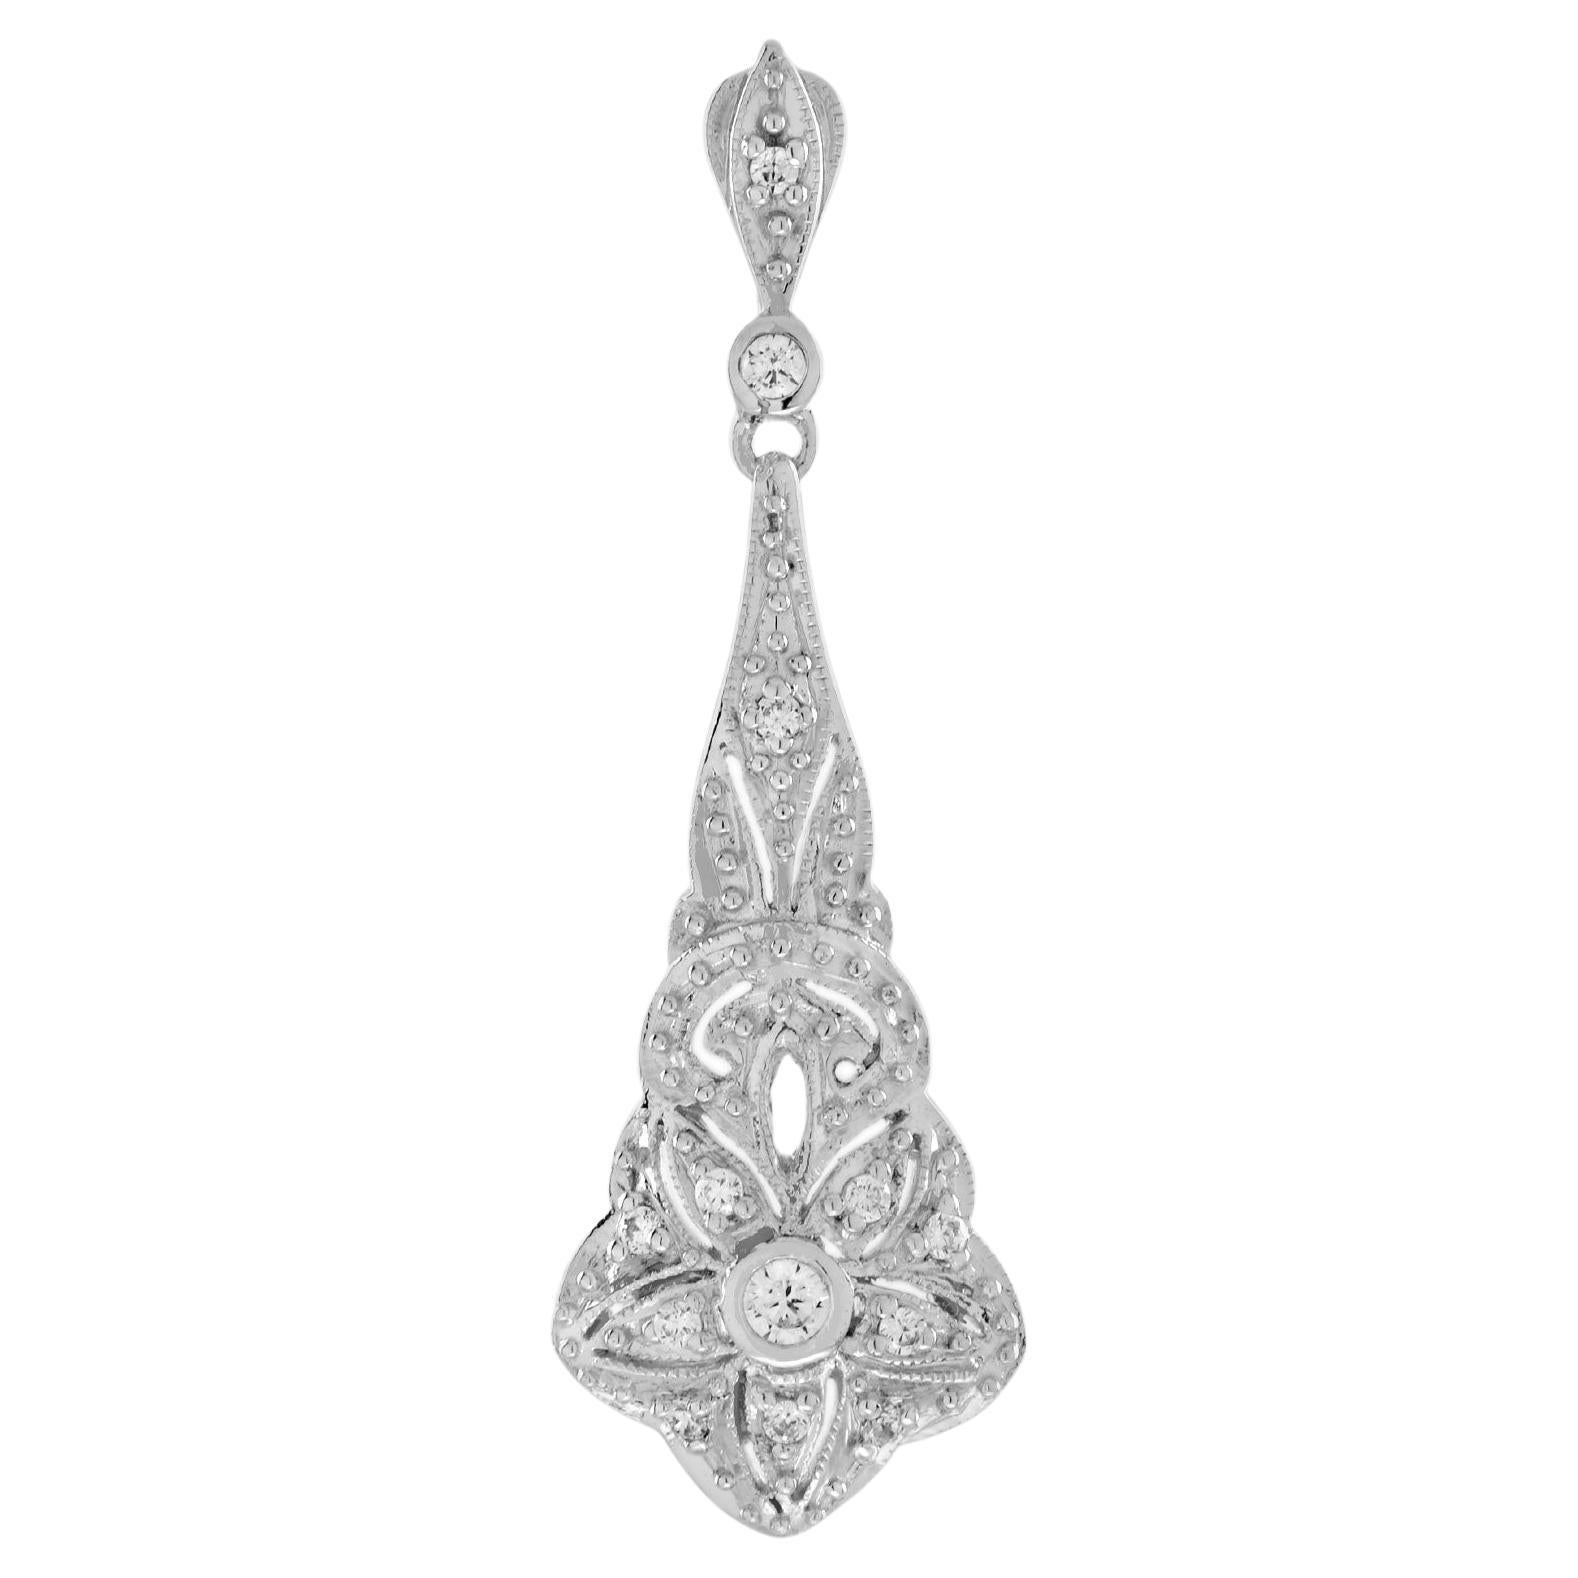 Diamond Art Deco Style Floral Pendant in 14k White Gold